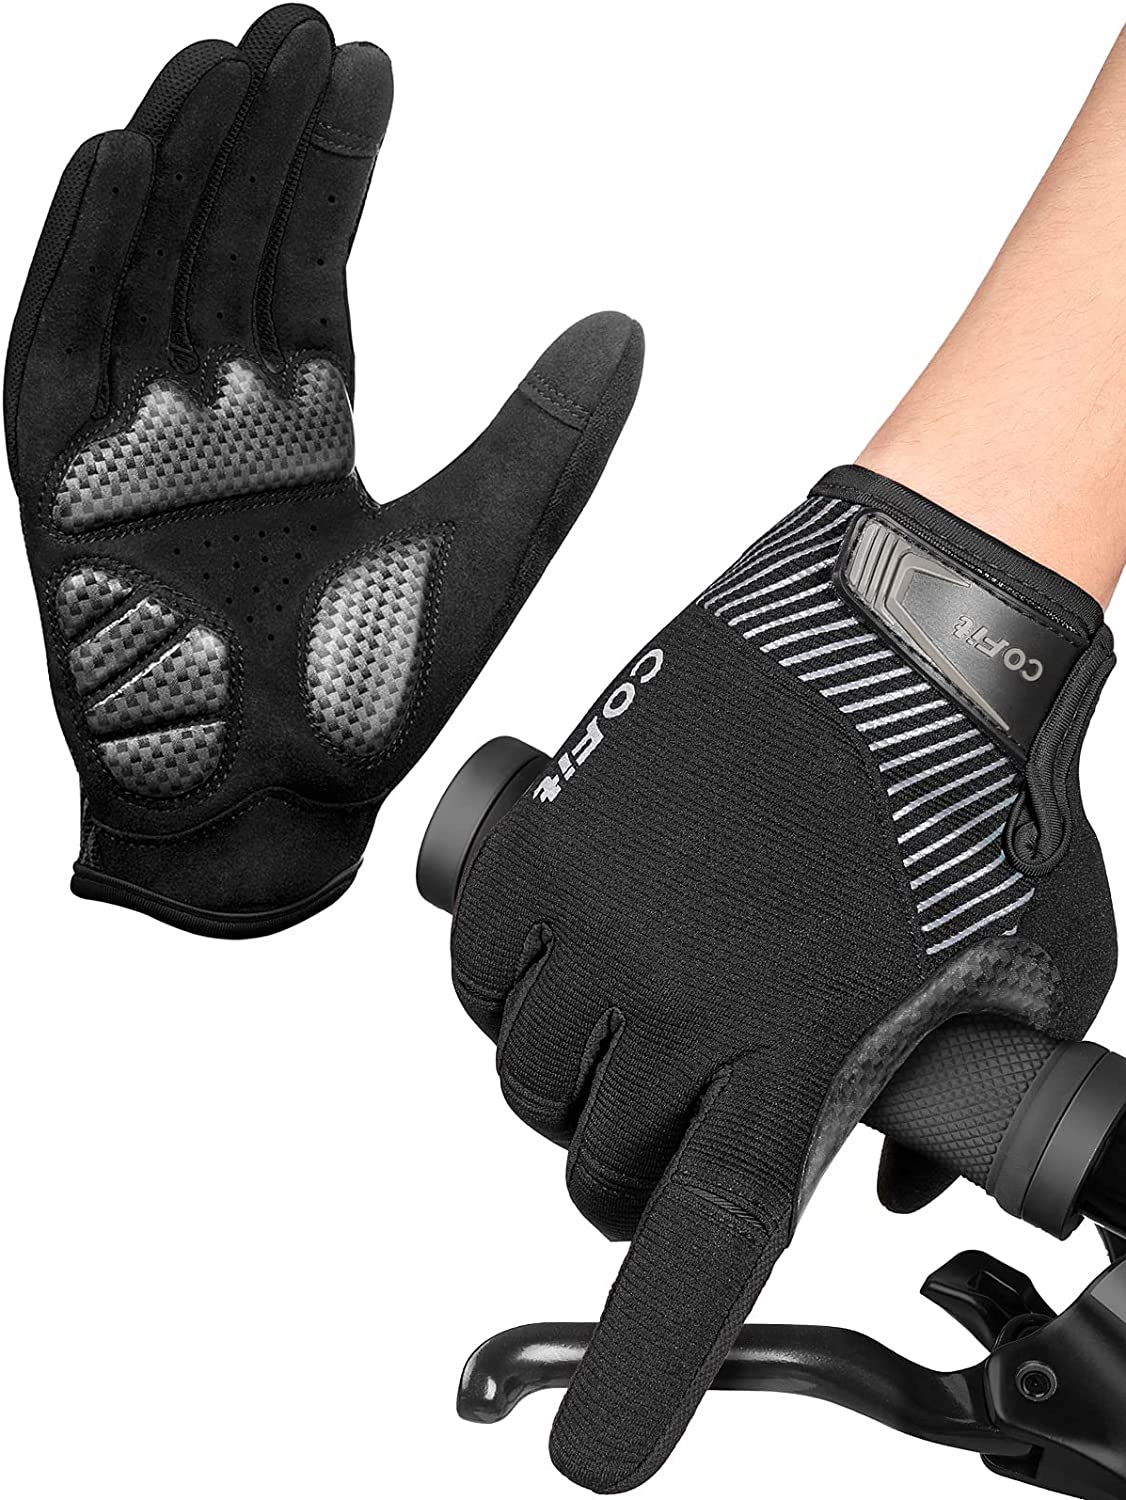 Cofit Anti-Slip Cycling Gloves